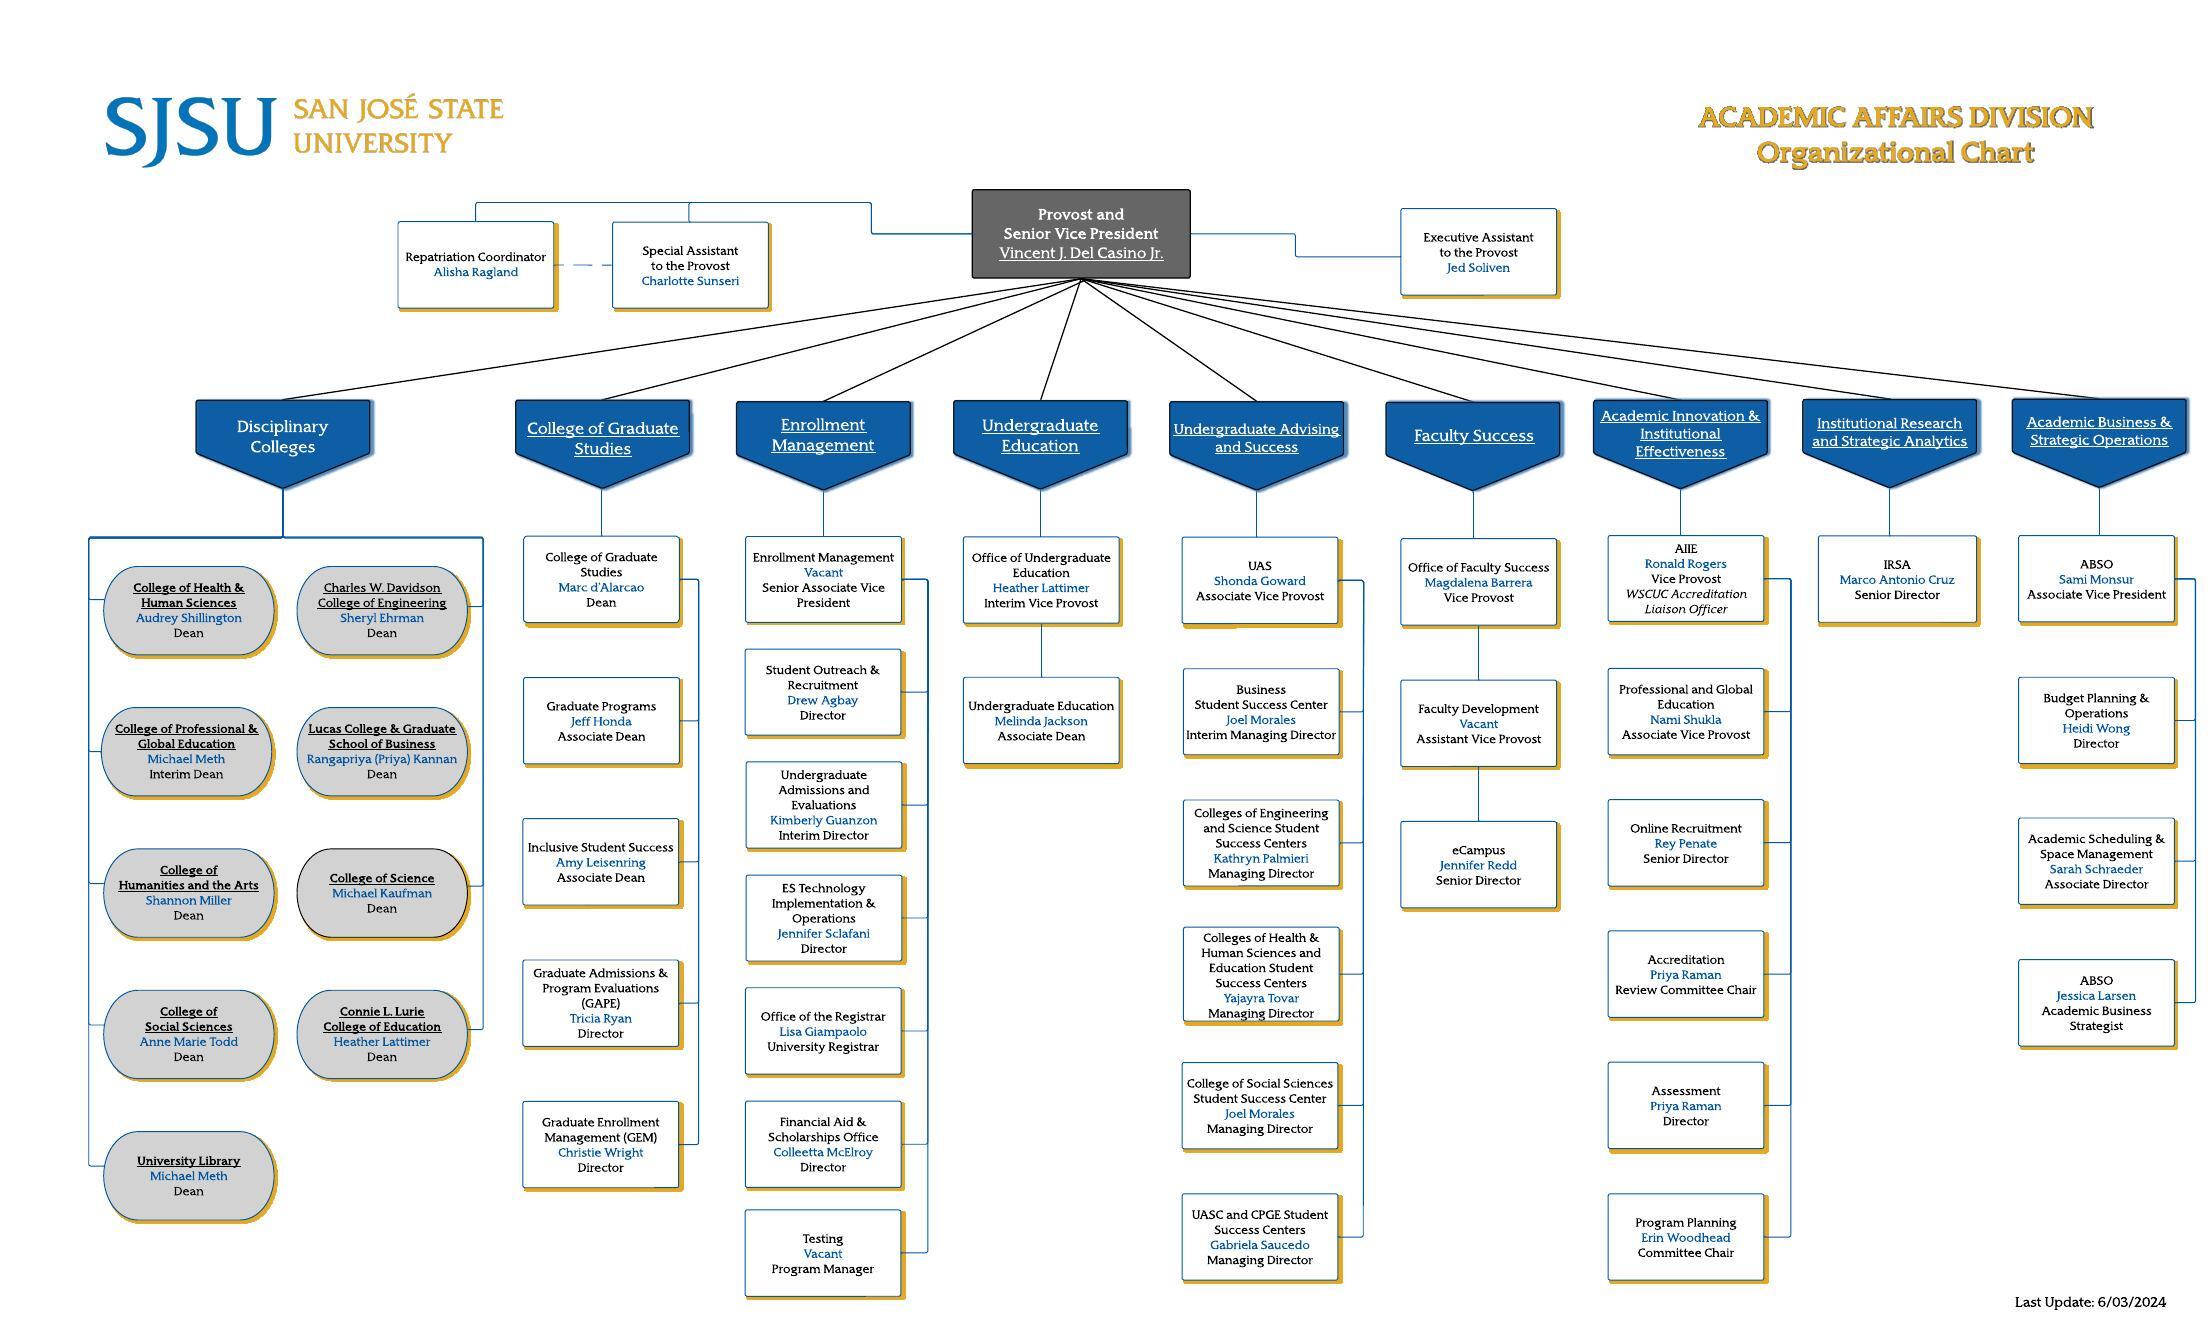 Academic Affairs Division Organizational Chart